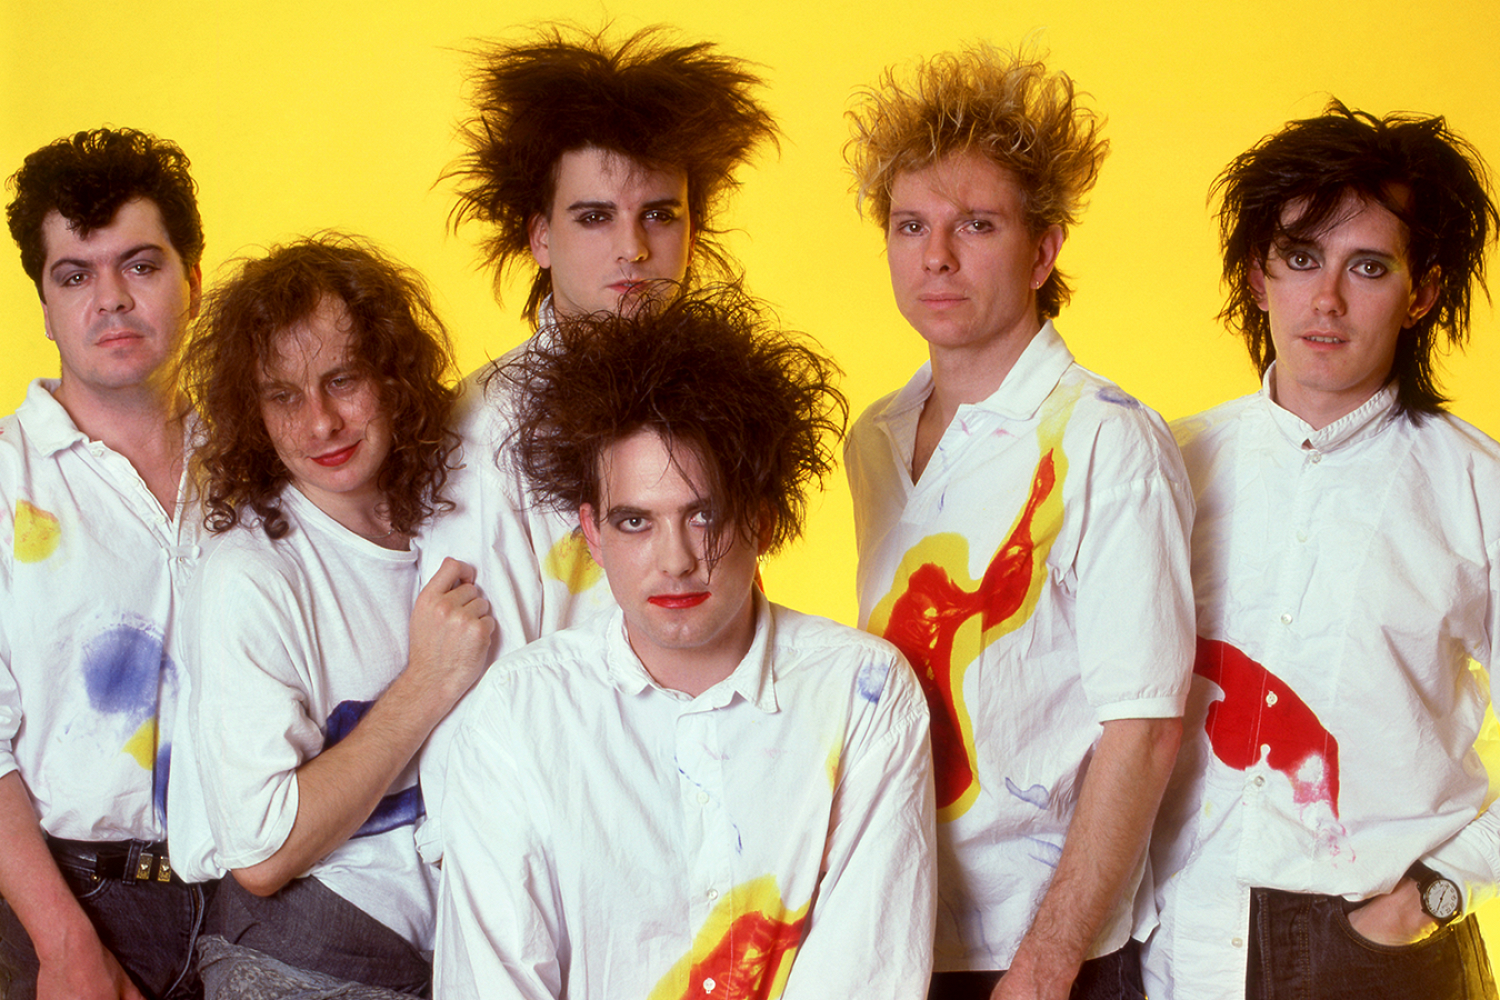 Группа the Cure. Группа the Cure 80s. The Cure фото группы.